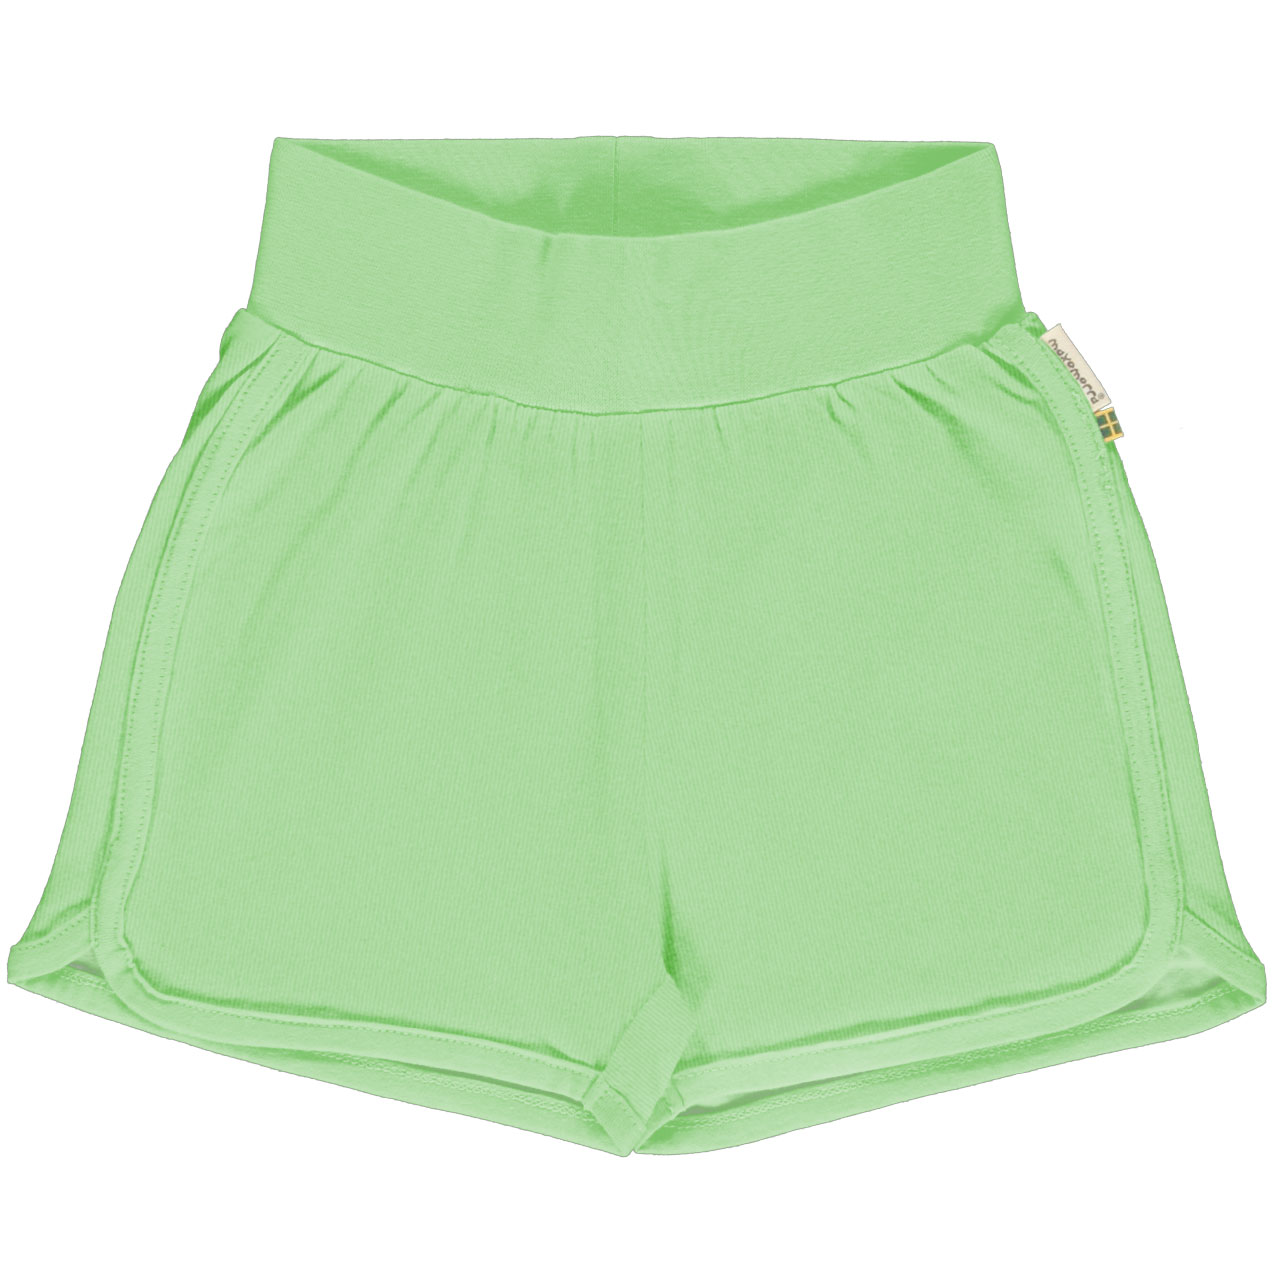 Leichte Jersey Shorts grün